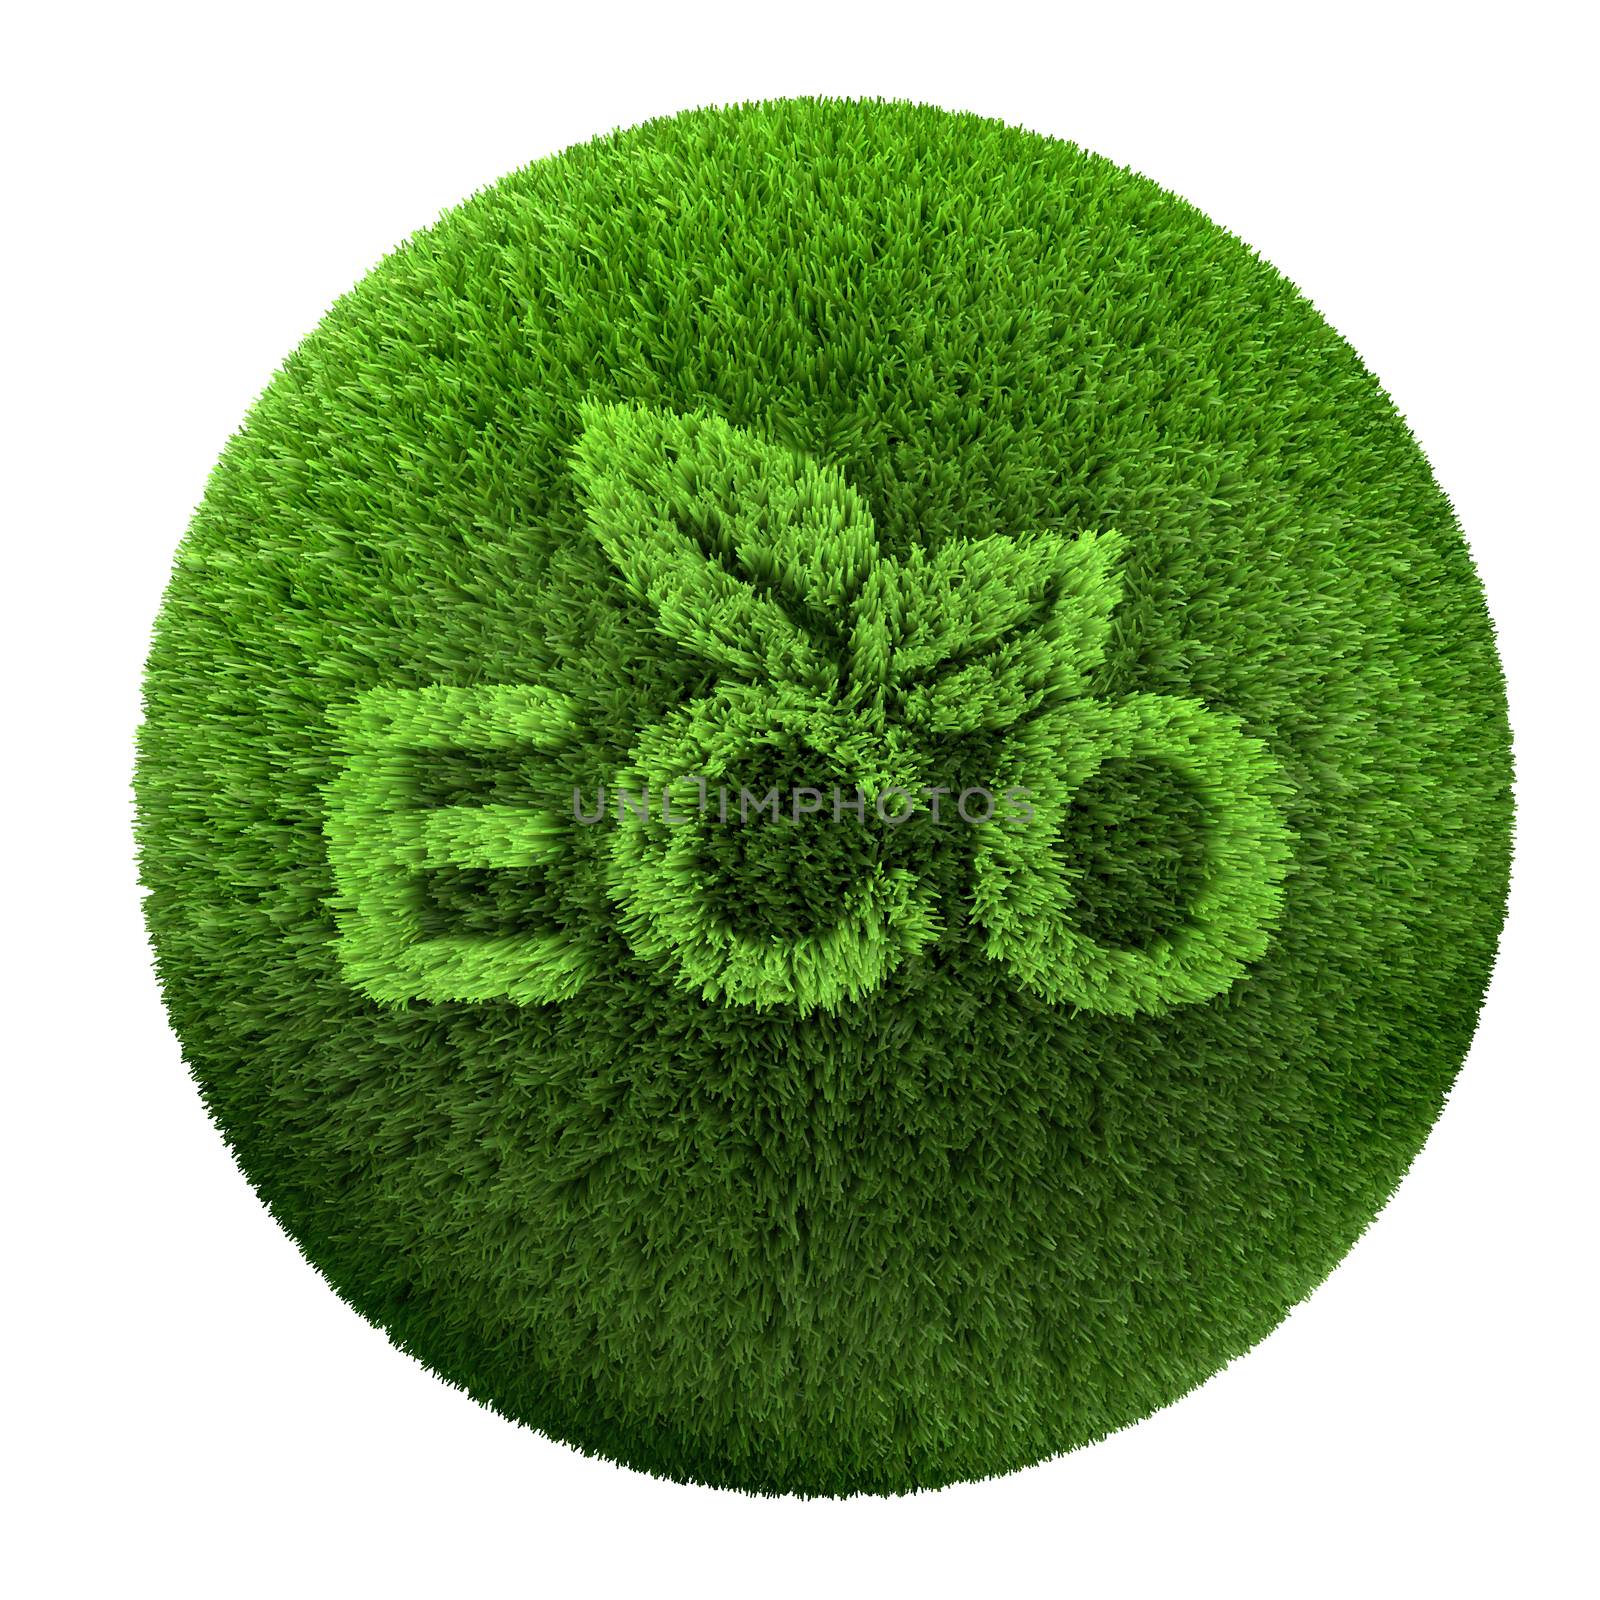 eco symbol grass on the world